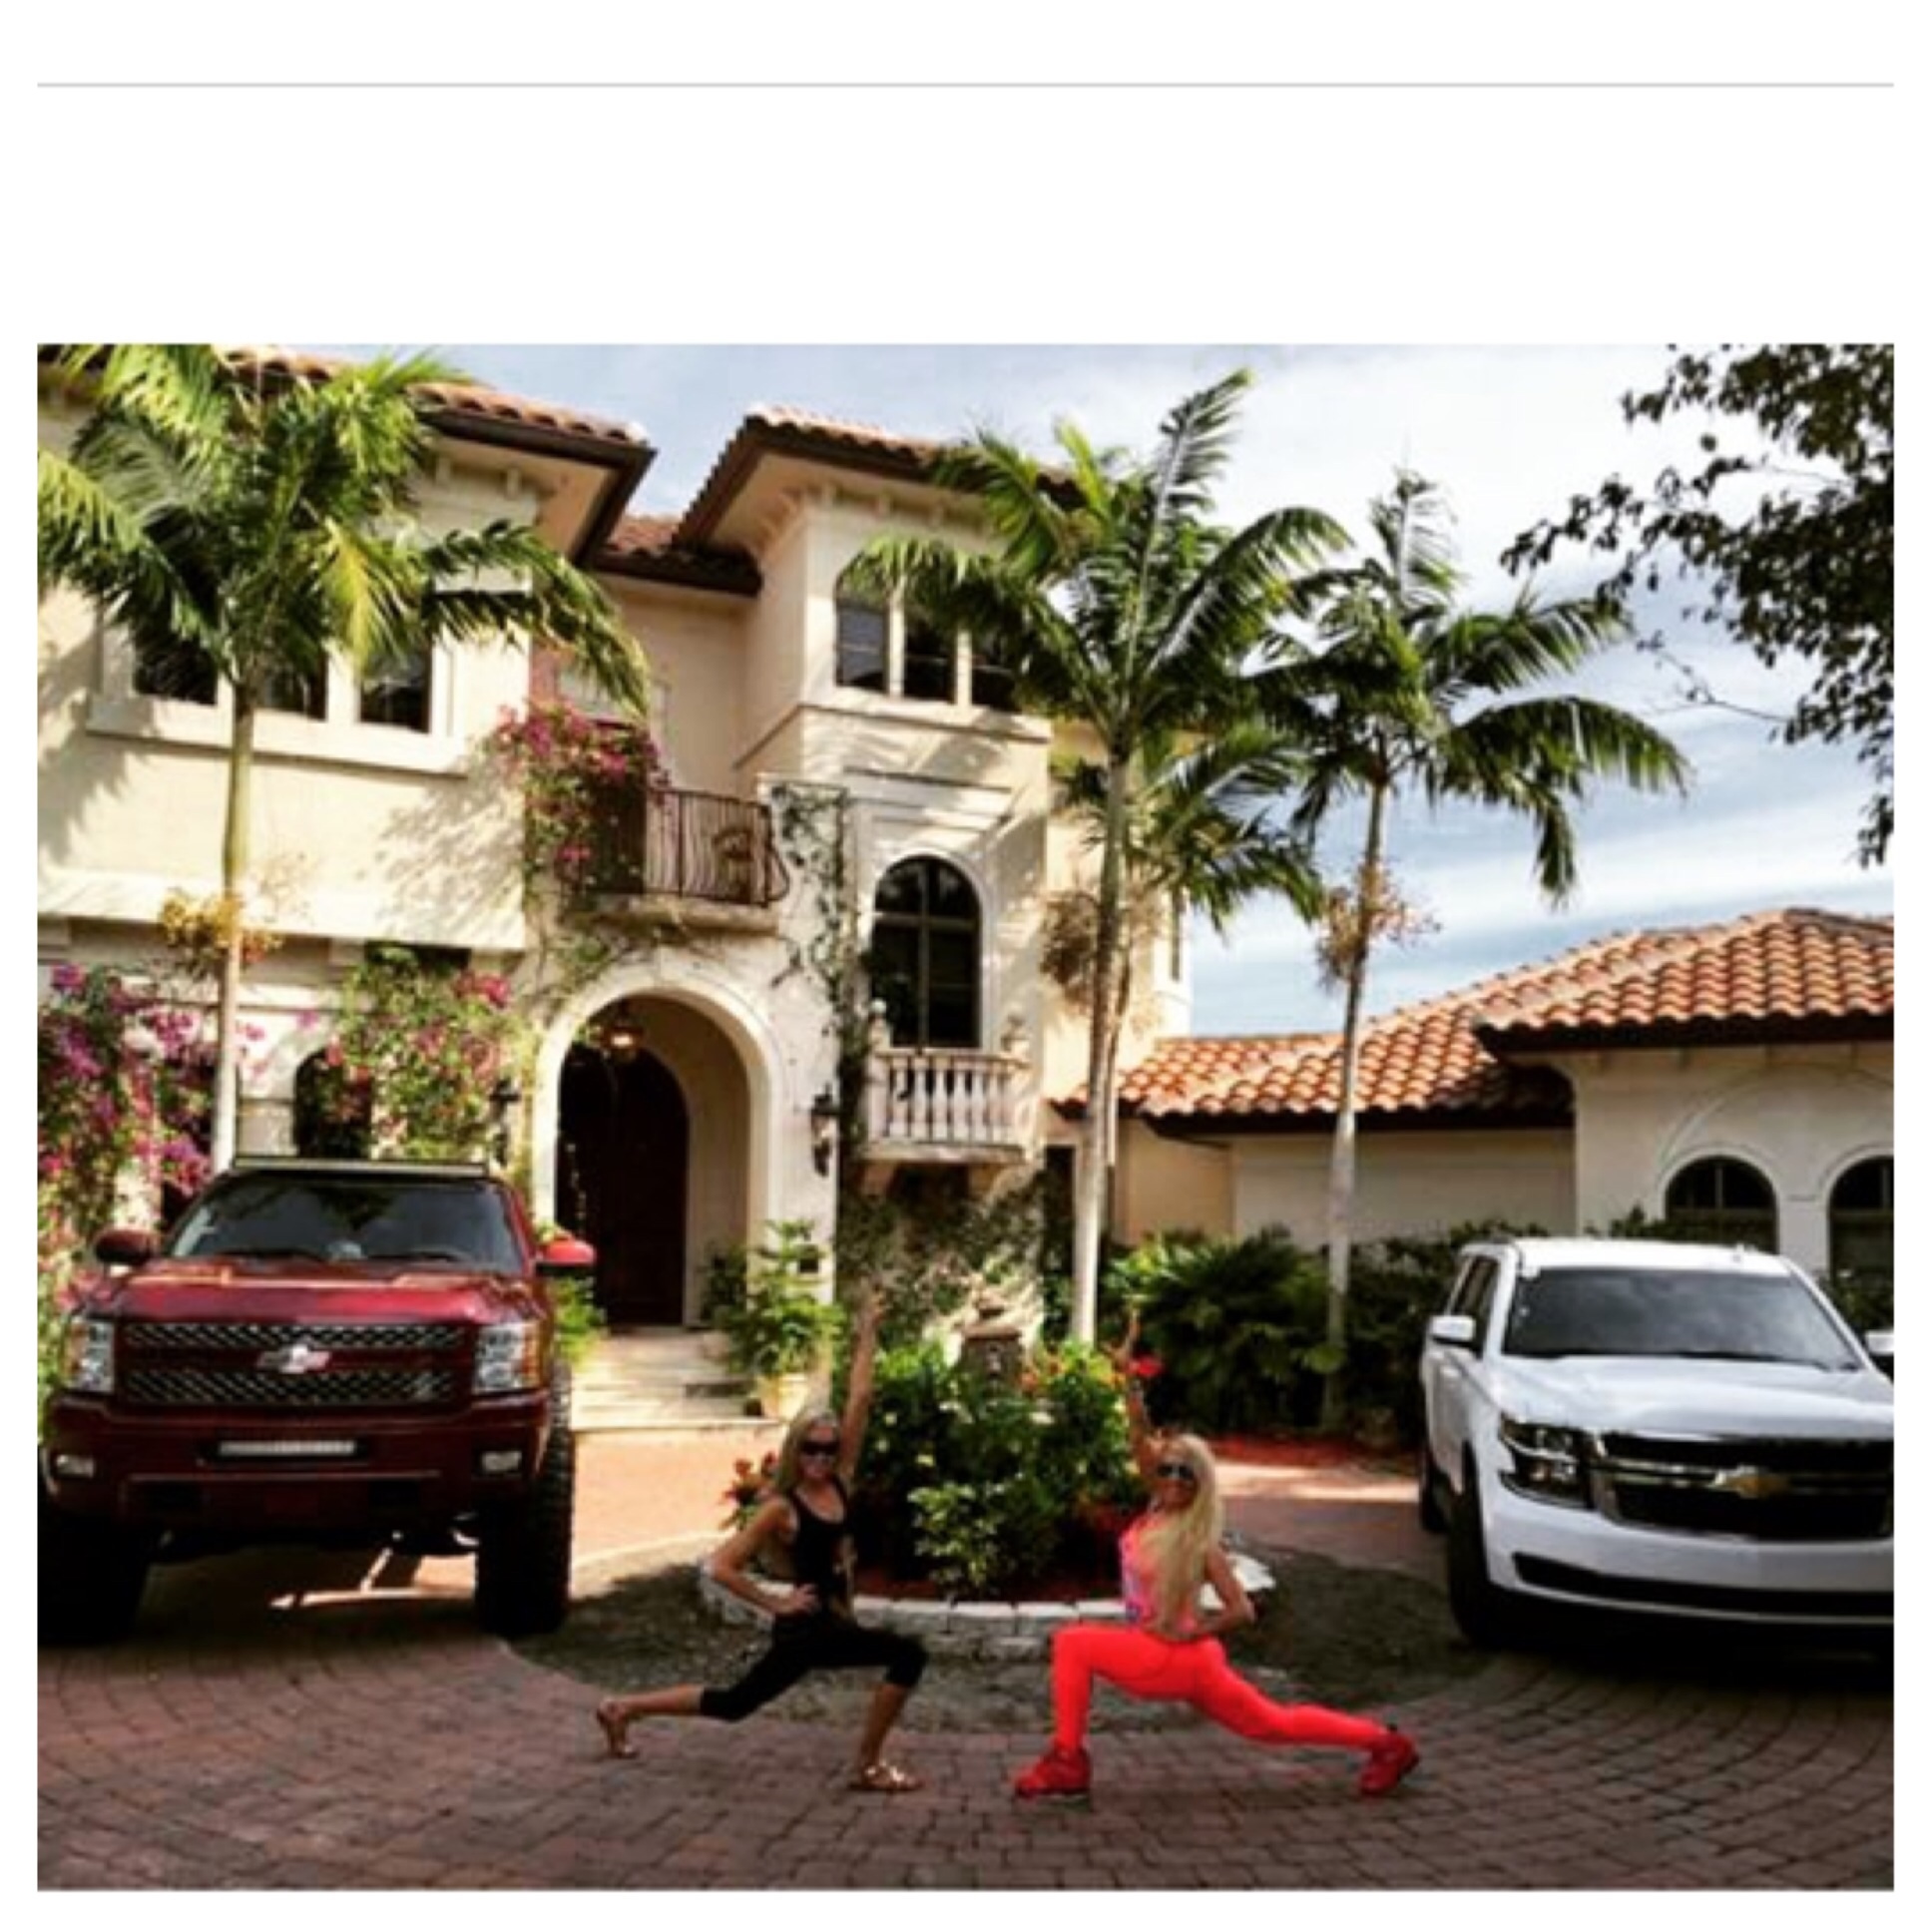 Shawn Rene Zimmerman health fitness model tv fitness expert wedding celebrate luxury mansion homes beauty Marco island nike nikewomen nike revolution sky high fashion beyond yoga nike women